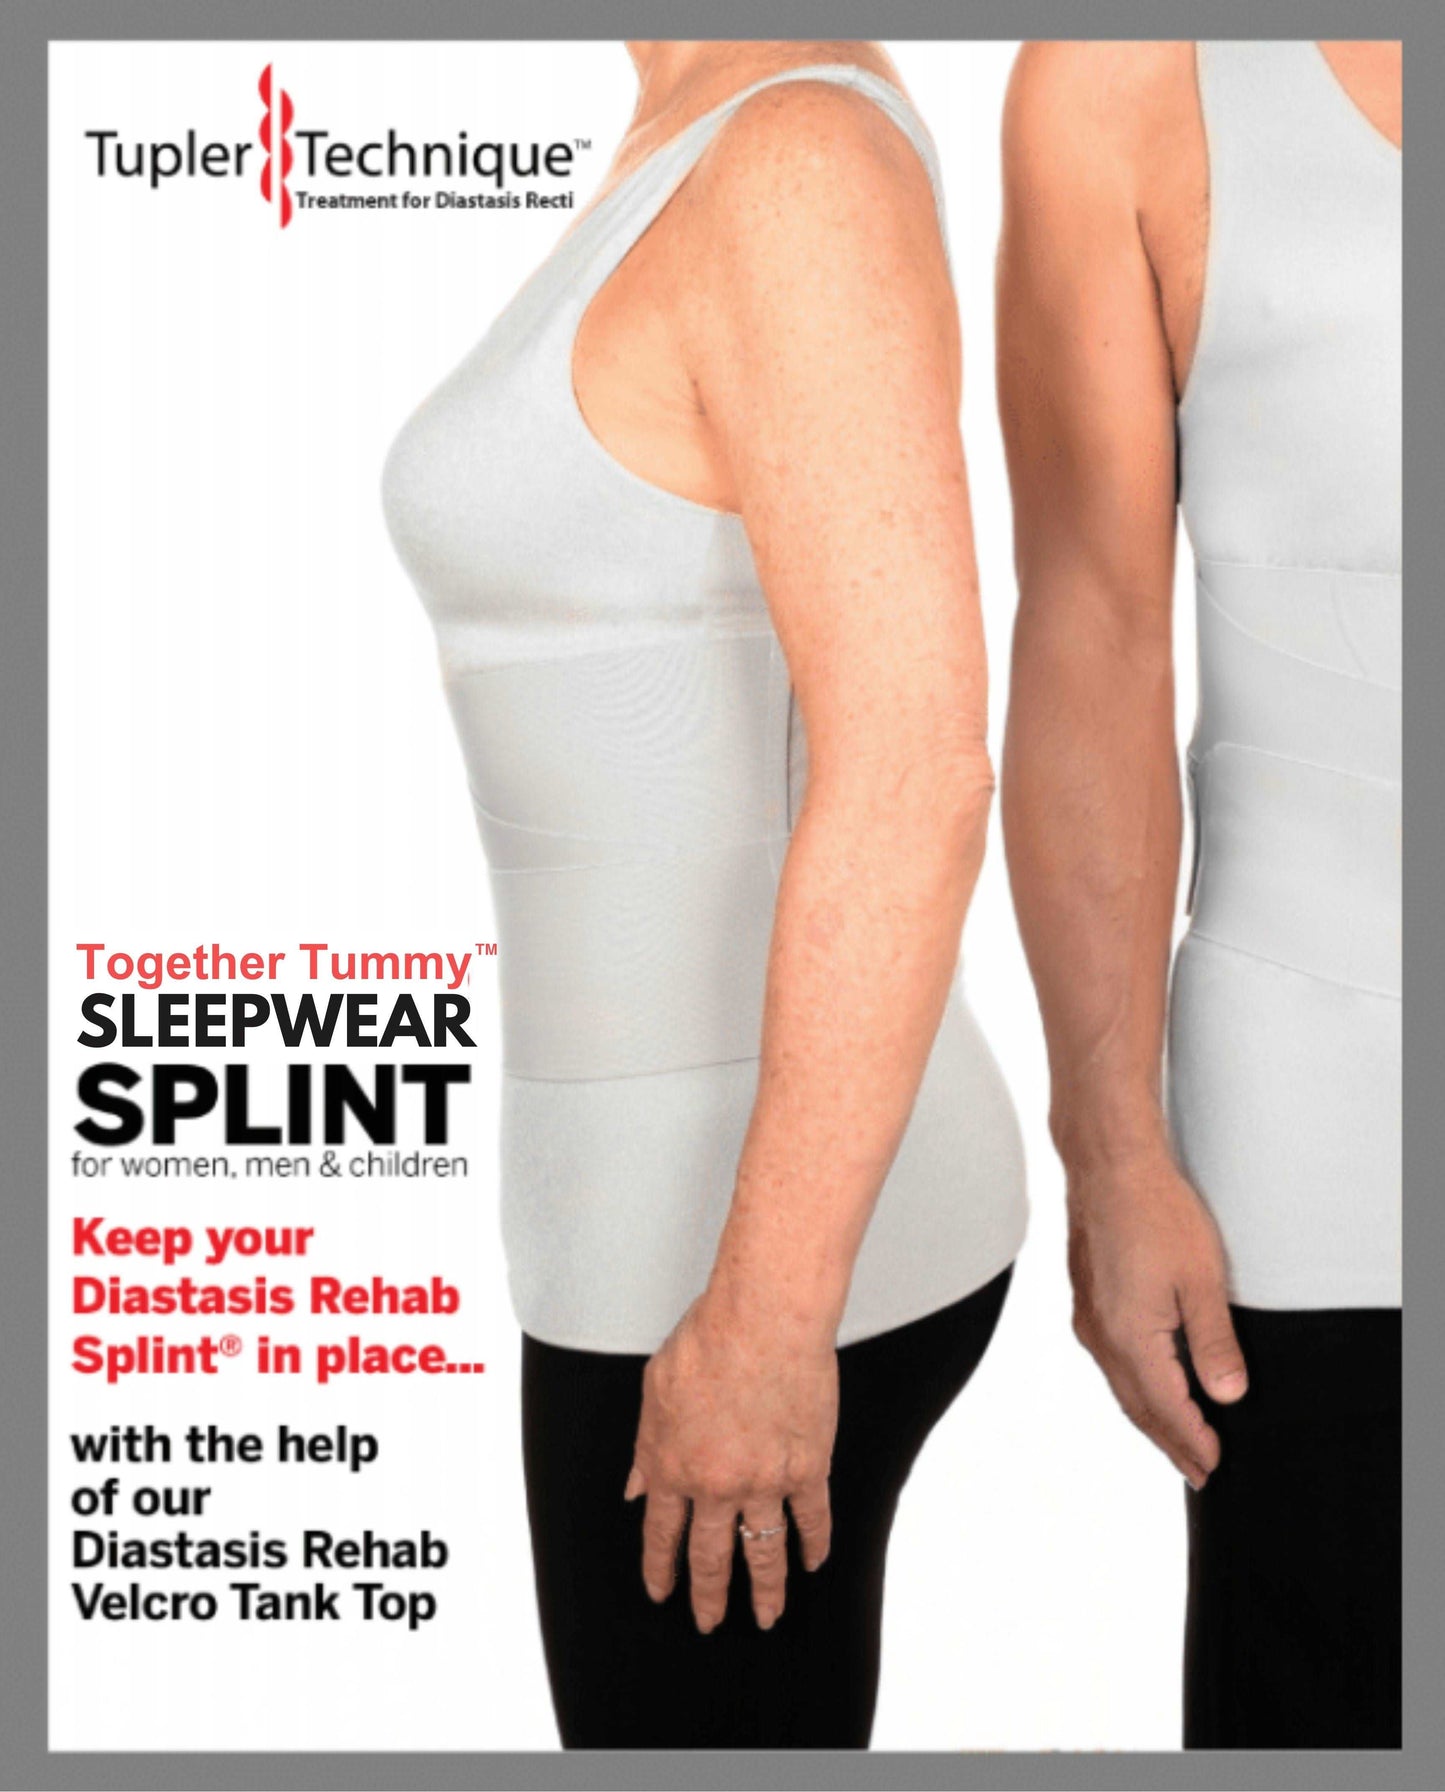 Diastasis recti Splints - Good? Bad? A Better Option